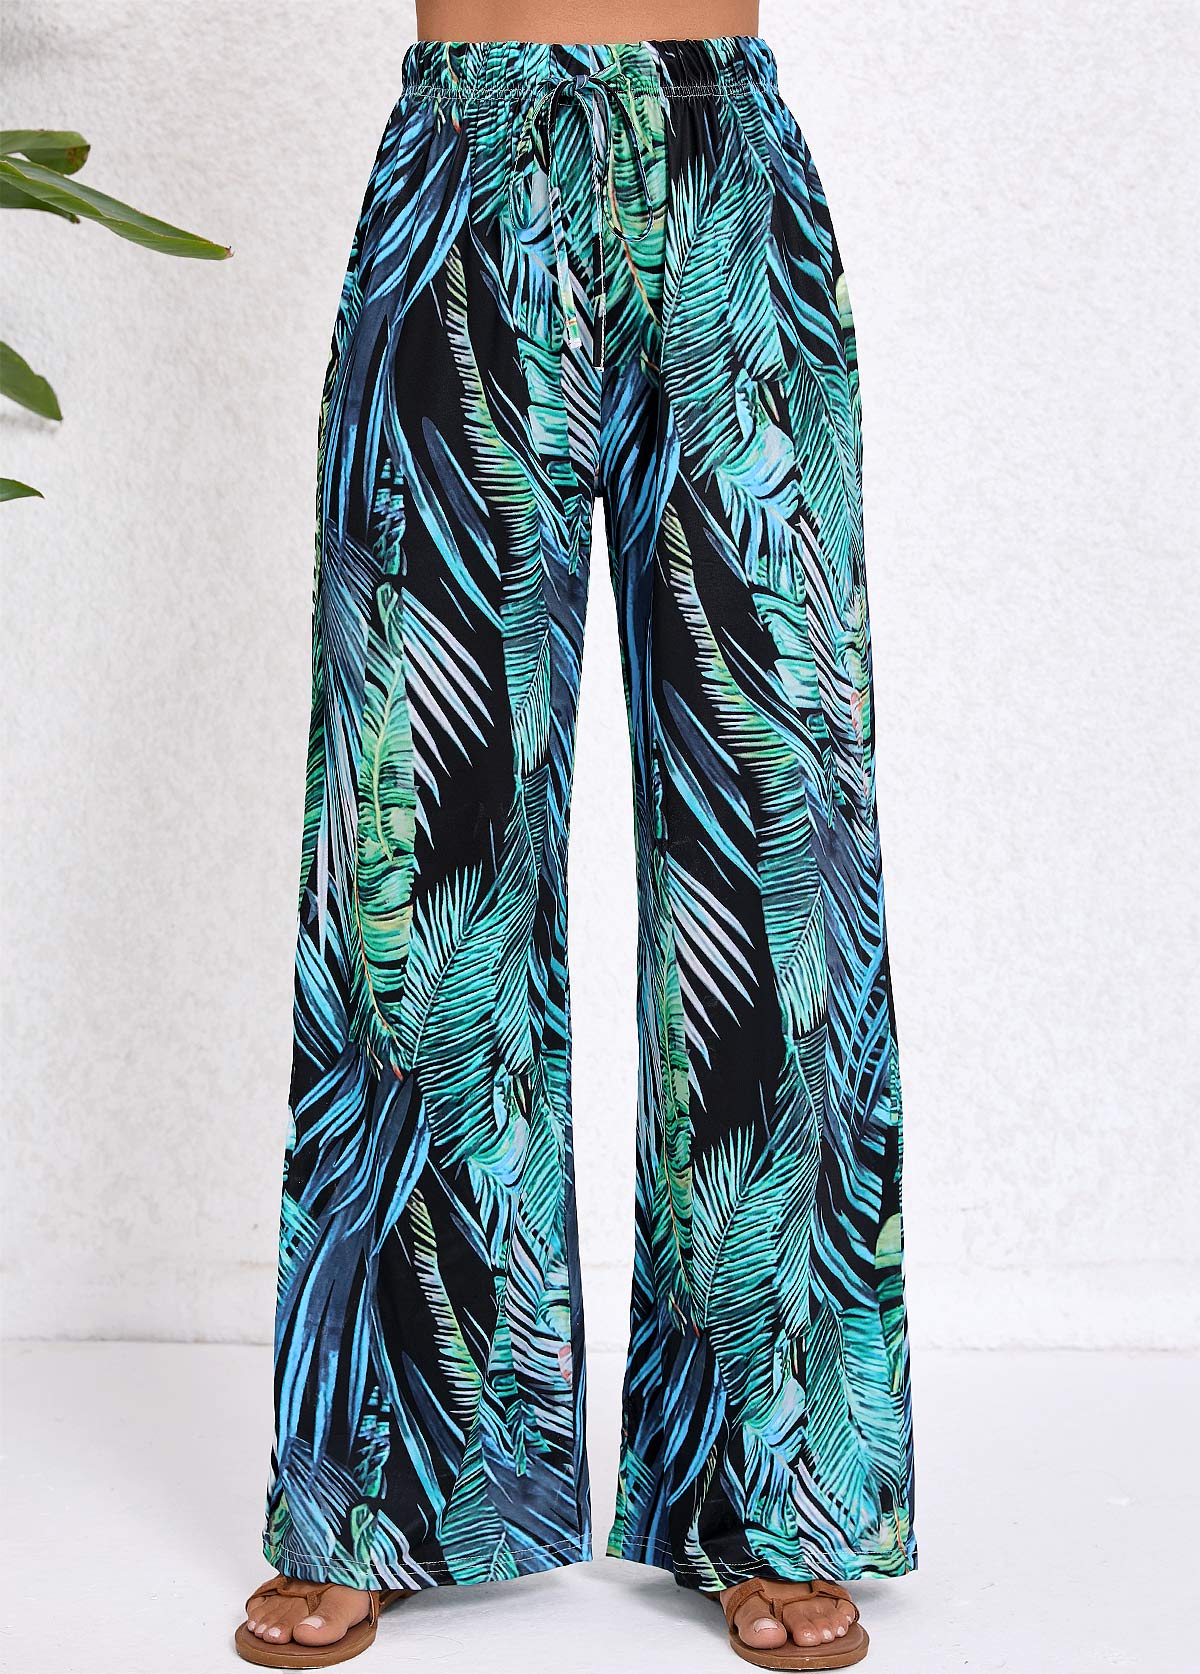 Tropical Plants Print Pocket Turquoise Elastic Waist Pants